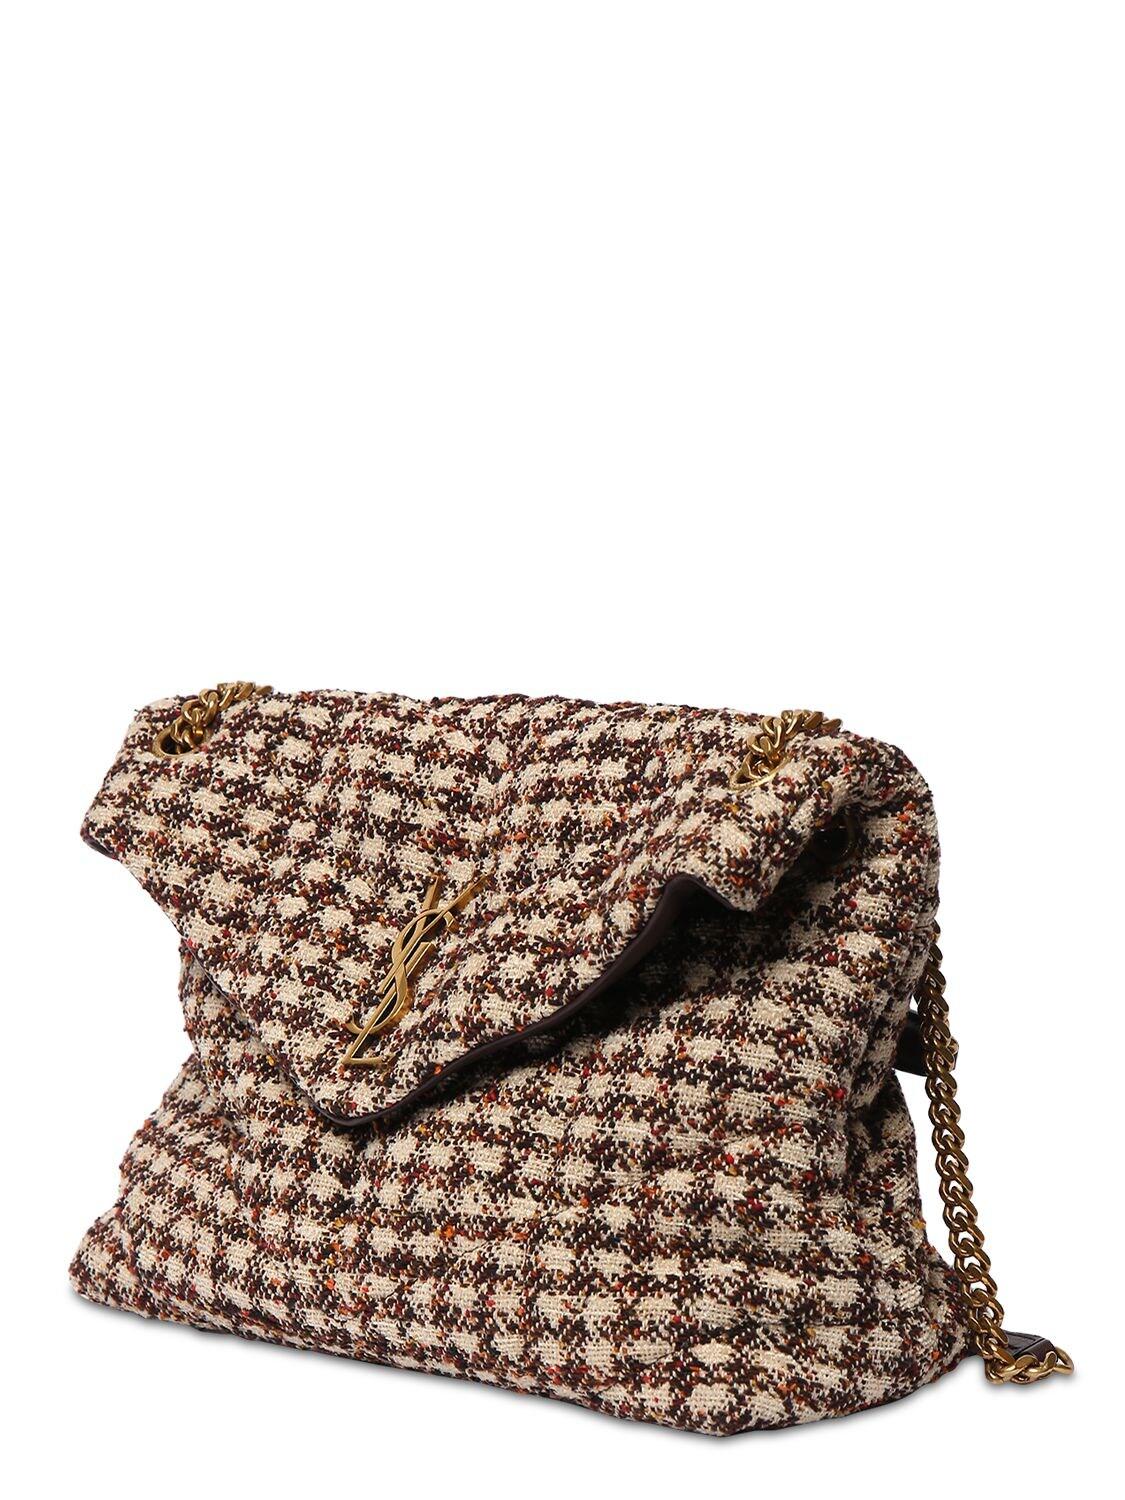 Saint Laurent Medium Loulou Checked Tweed Bag in Natural | Lyst